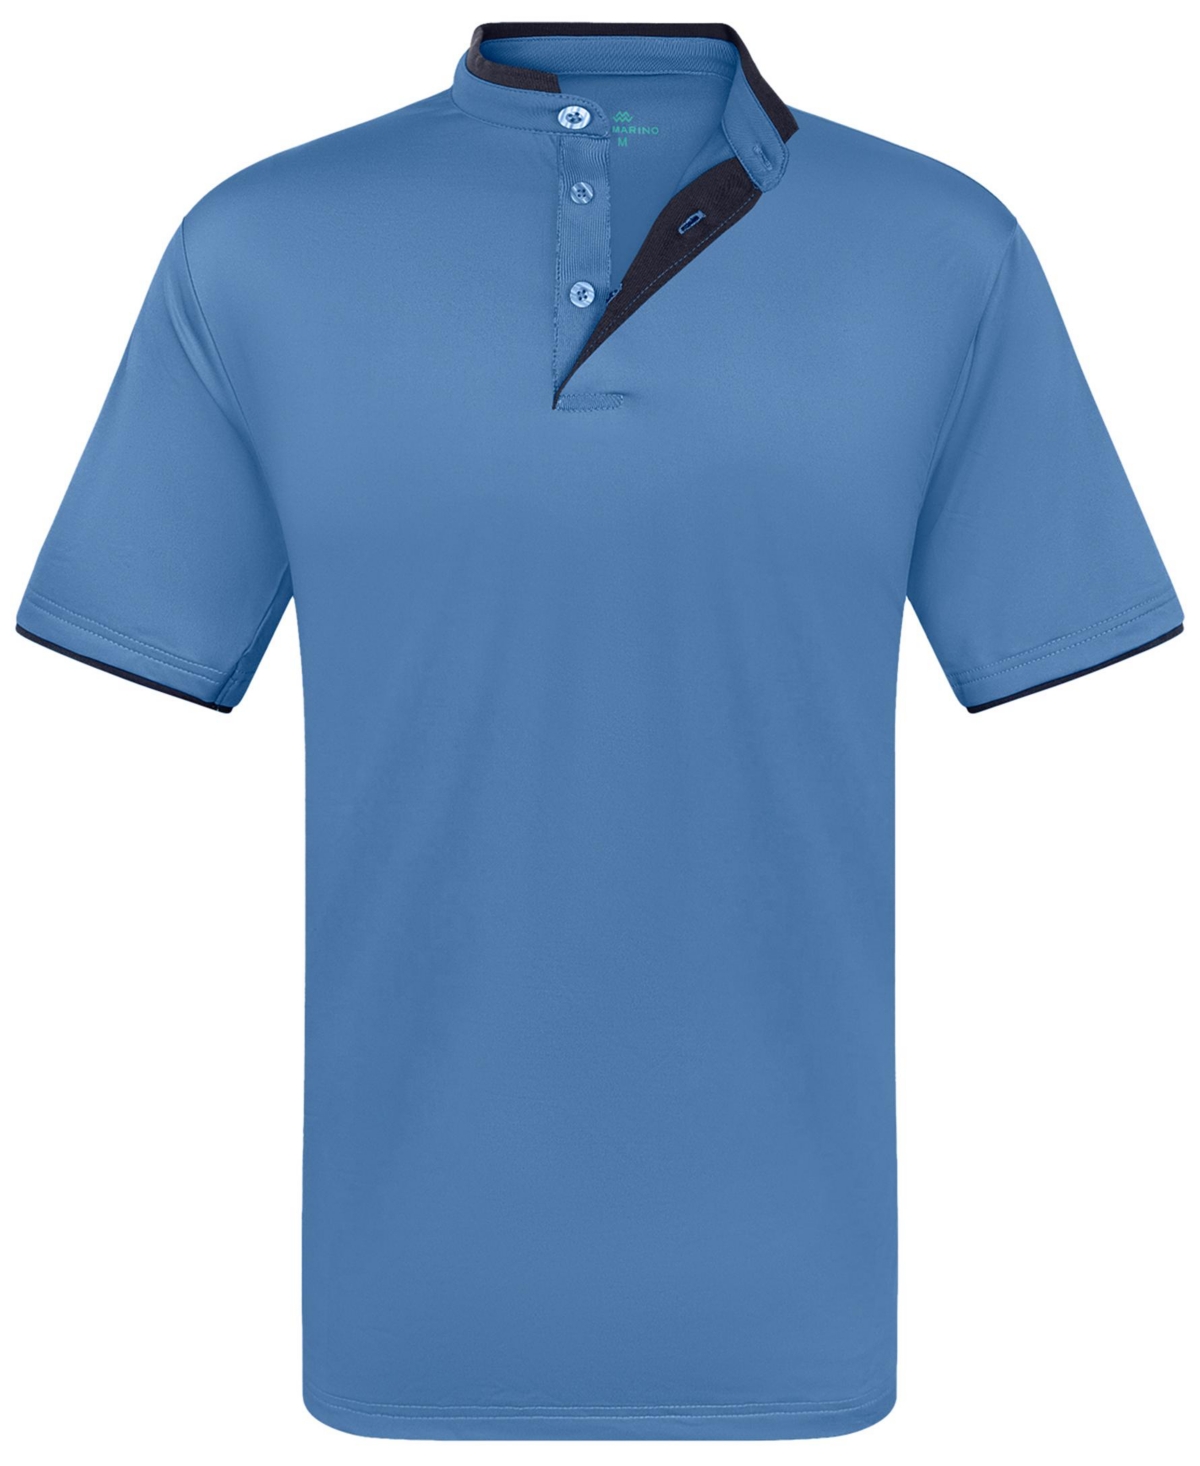 Men's Short Sleeve Henley Polo Shirt with Contrast-Trim - Sky blue